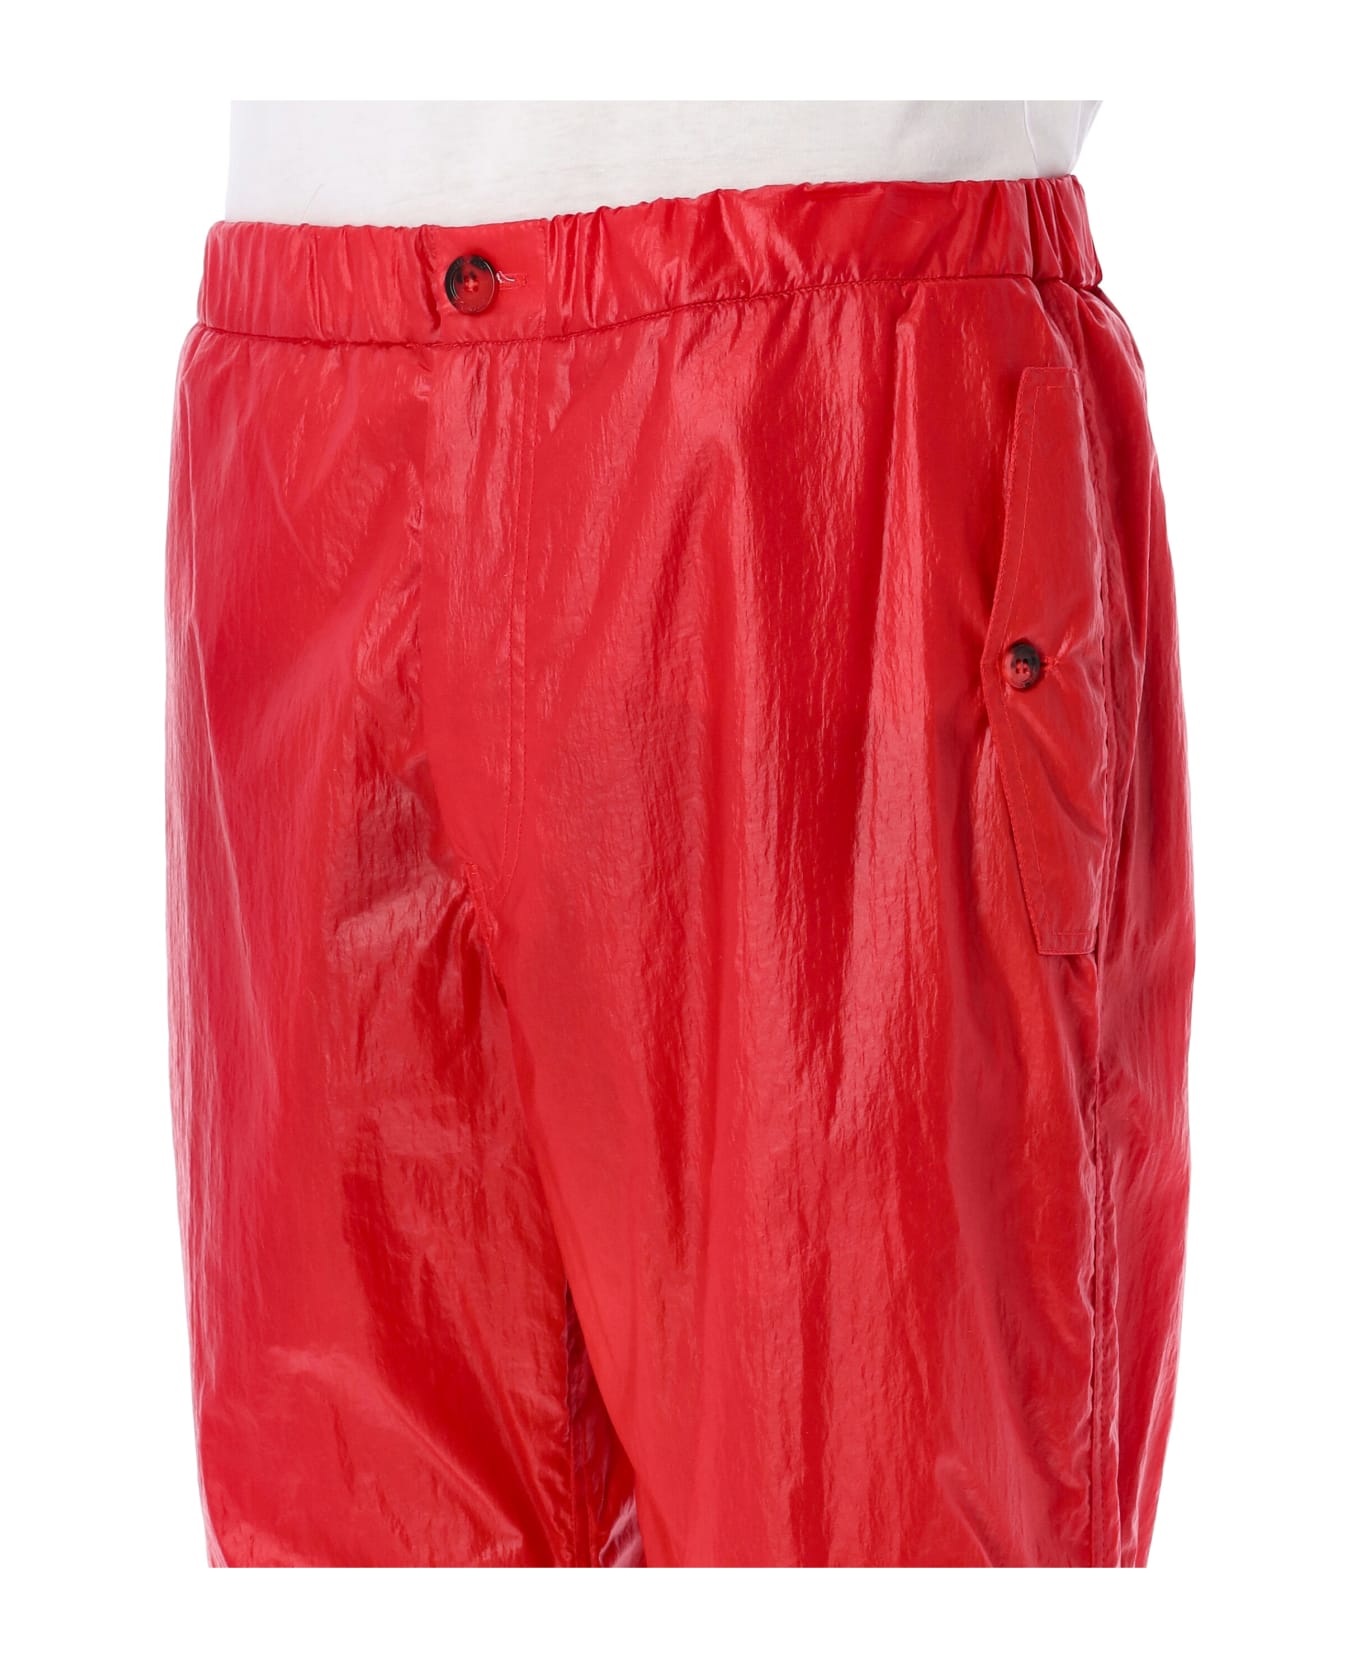 Ferragamo Drawstring Cargo Pants - RED